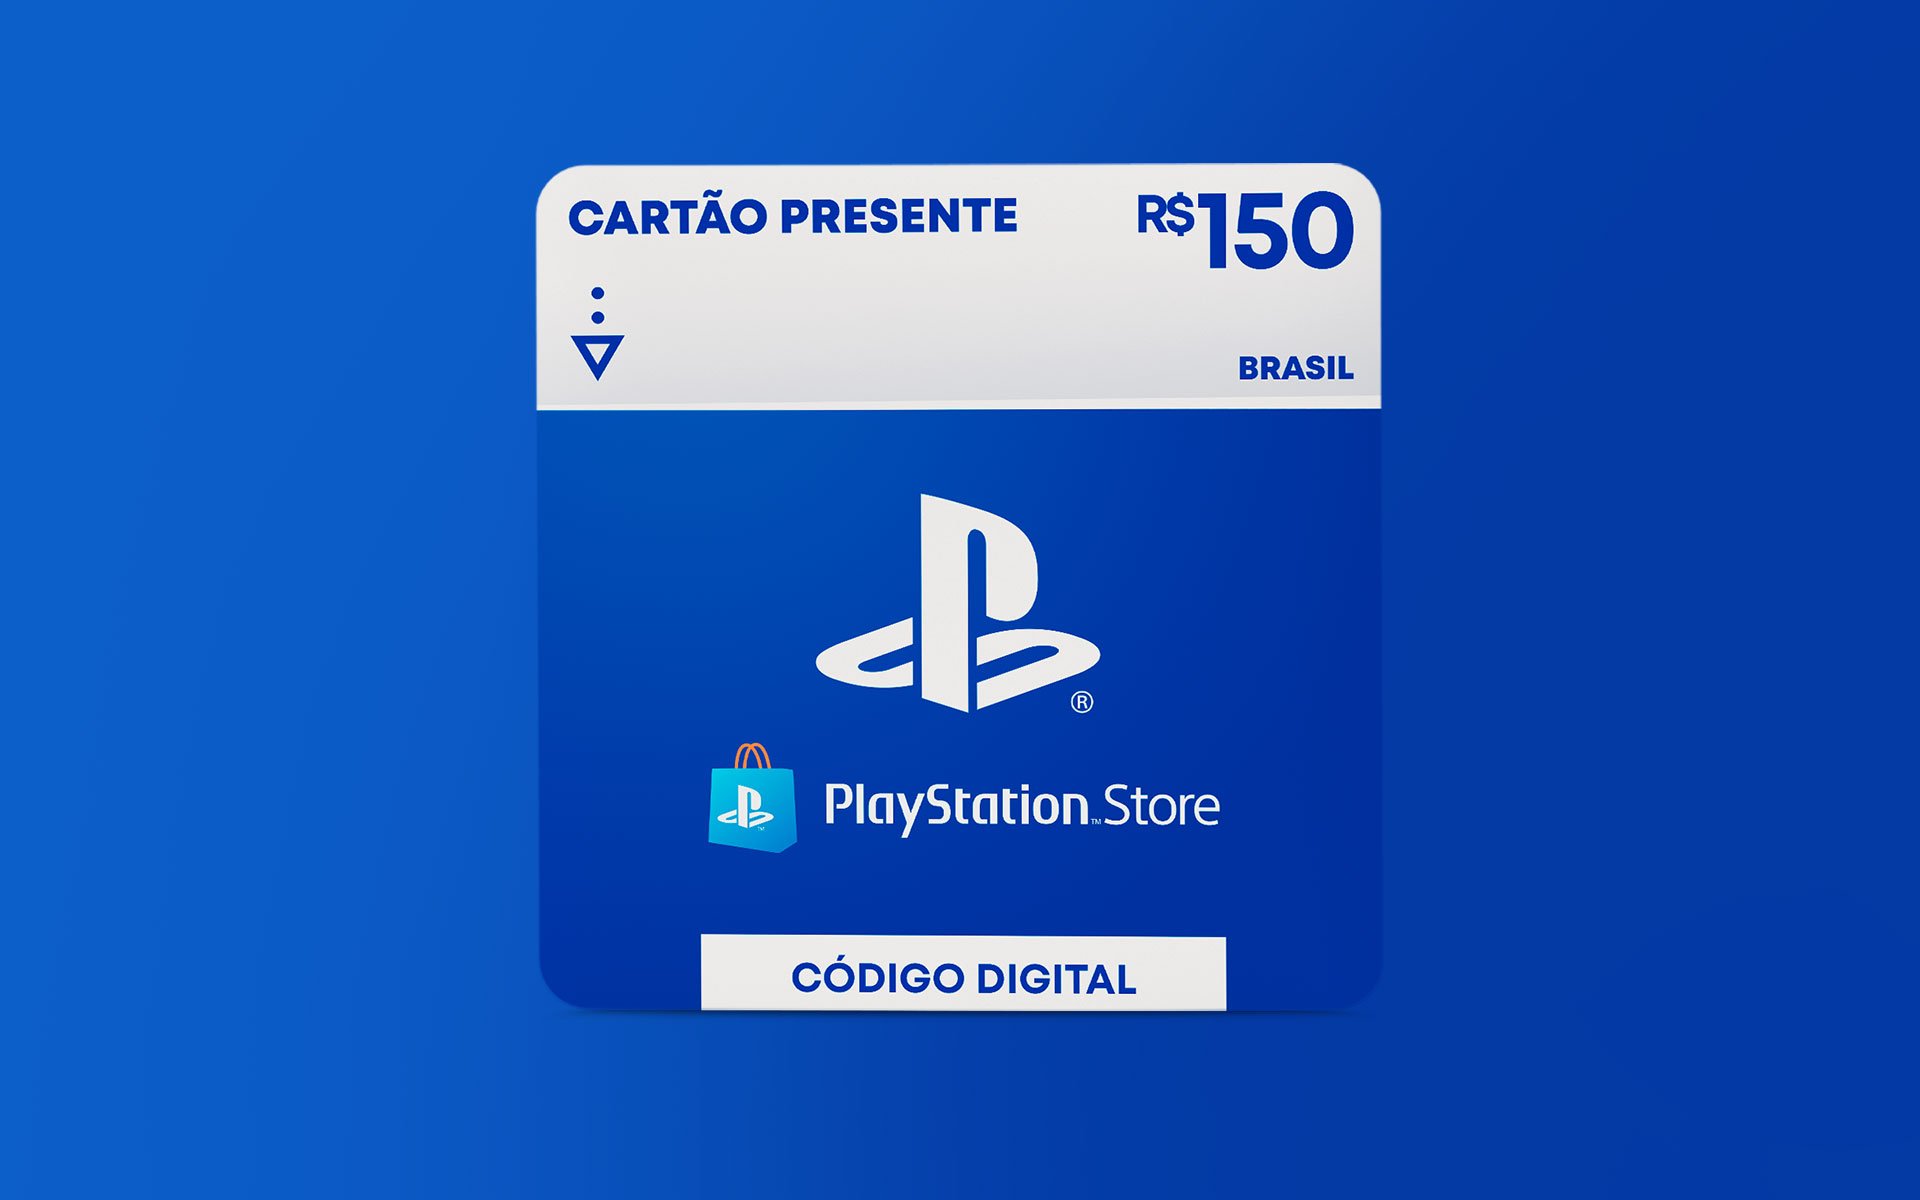 R$150 PlayStation Store - Cartão Presente Digital [Exclusivo Brasil] cover